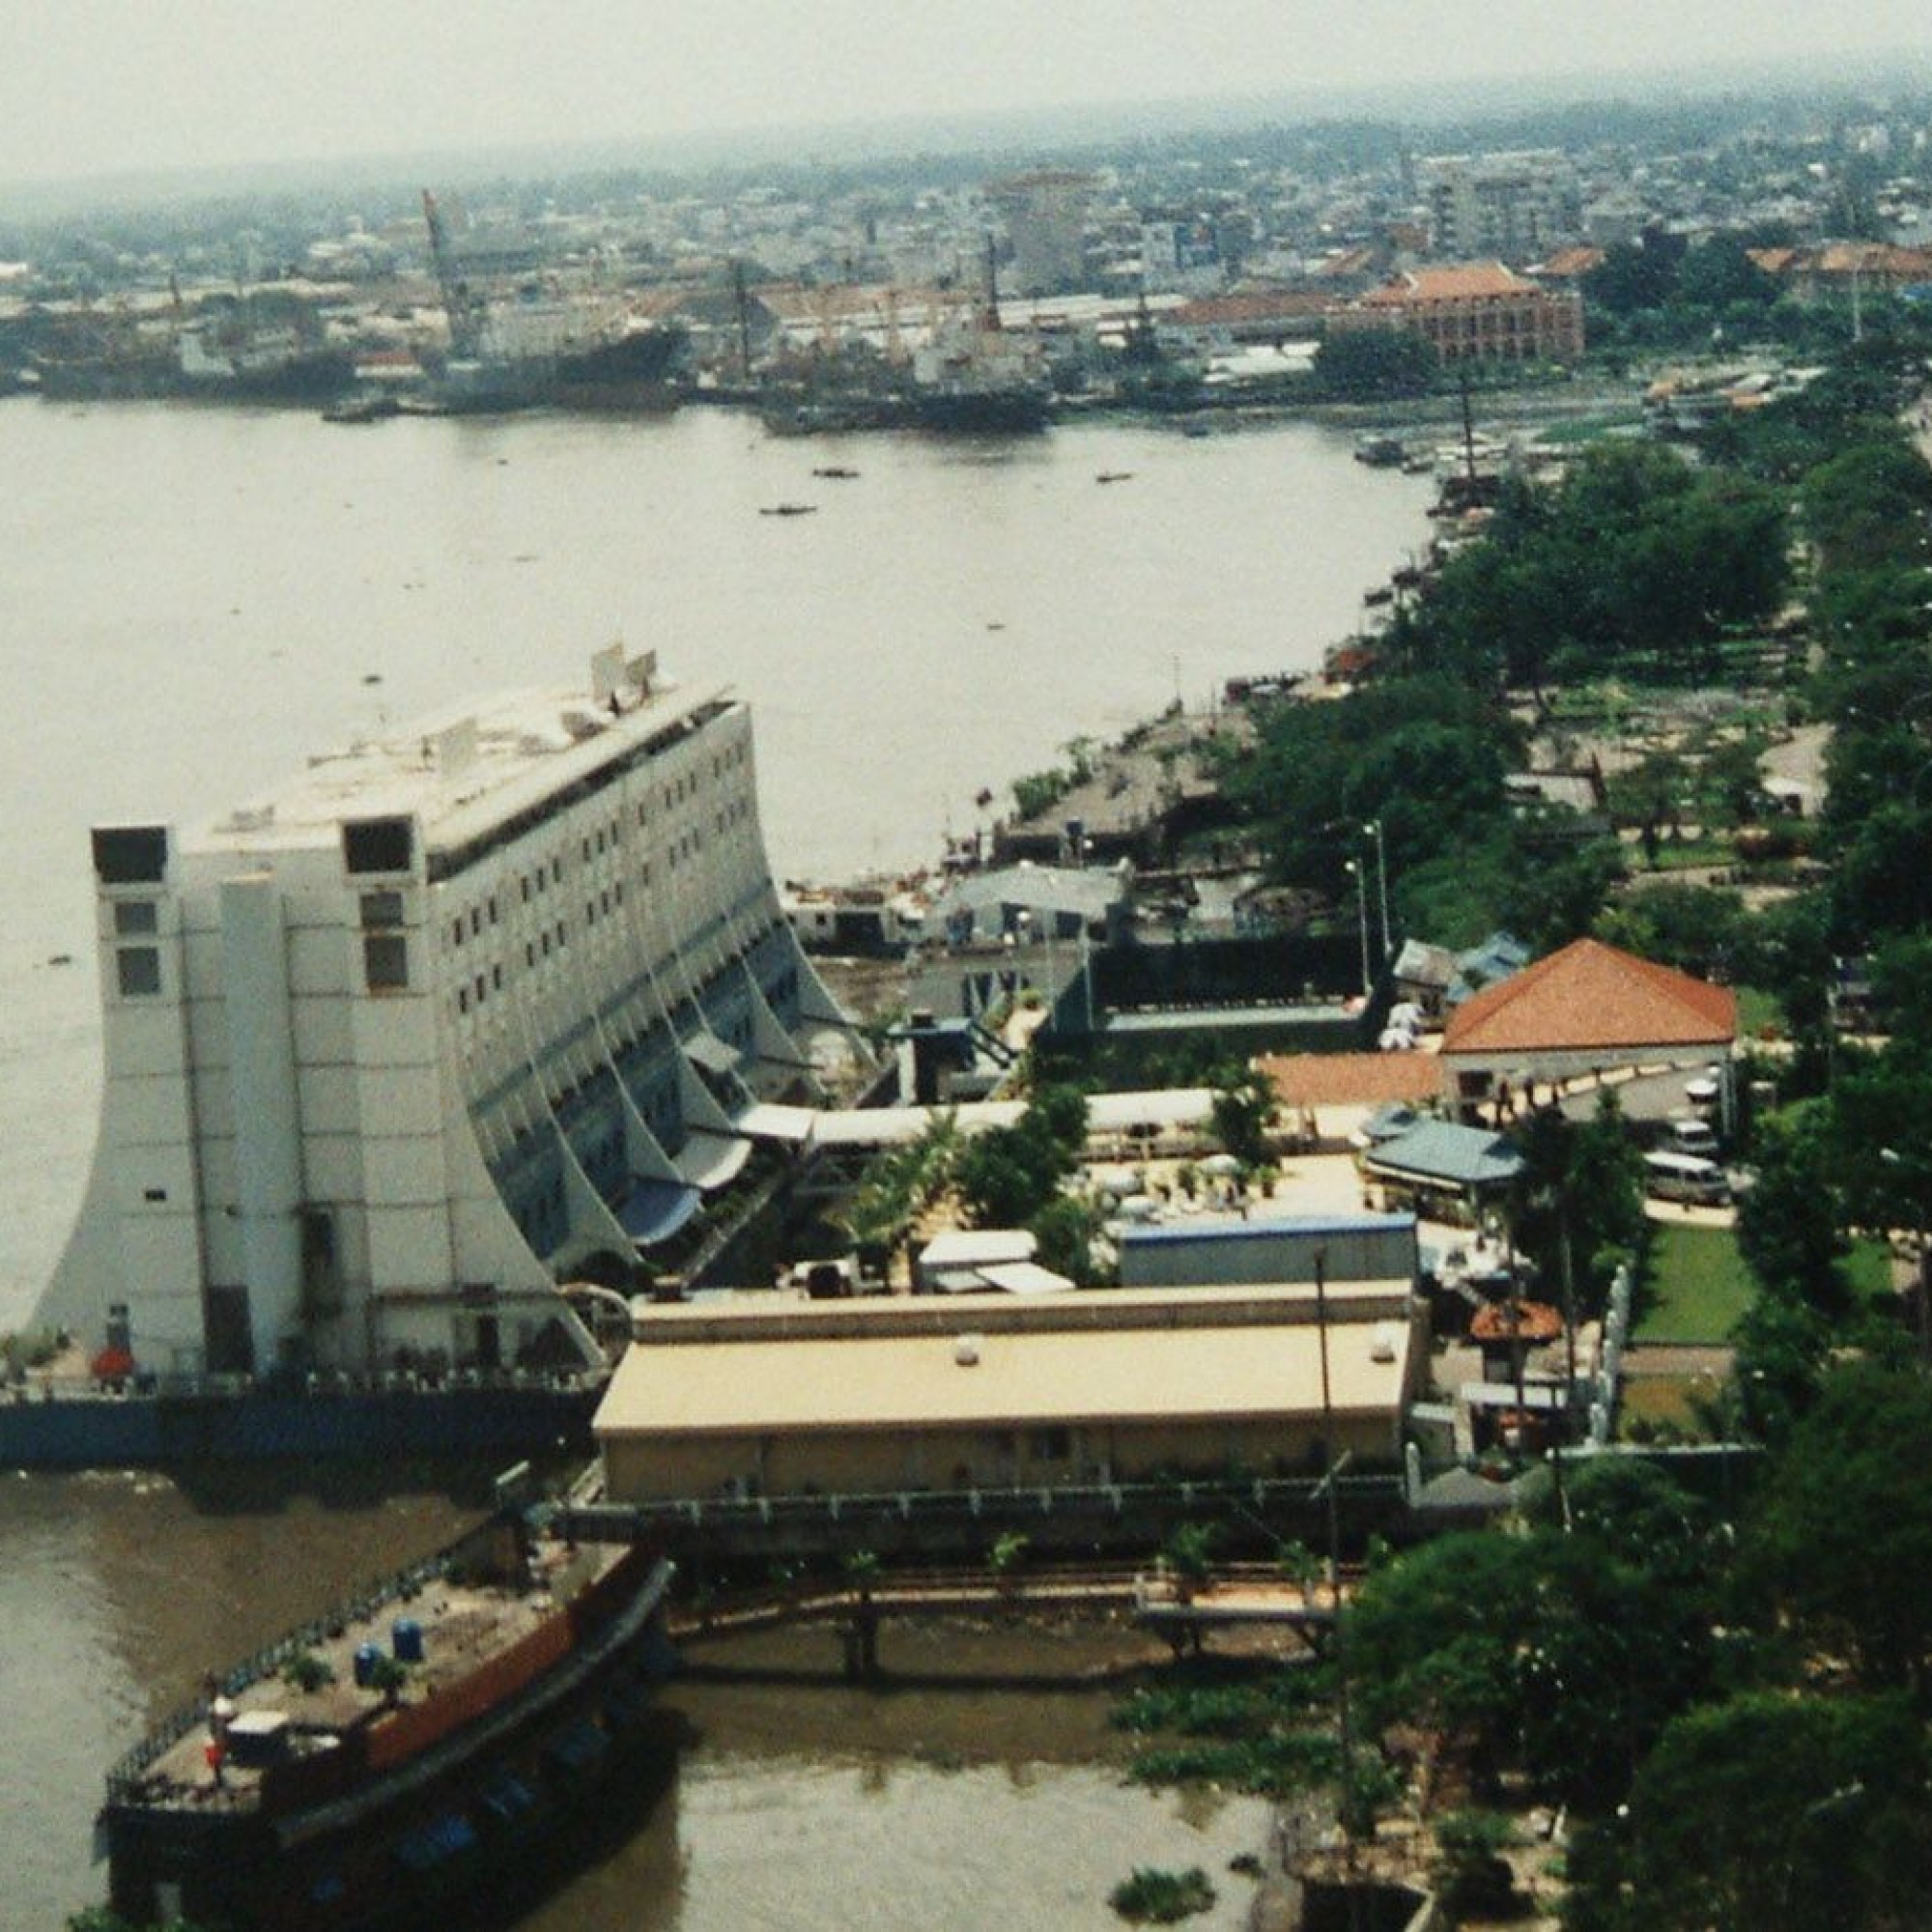 Saigon Floating Hotel